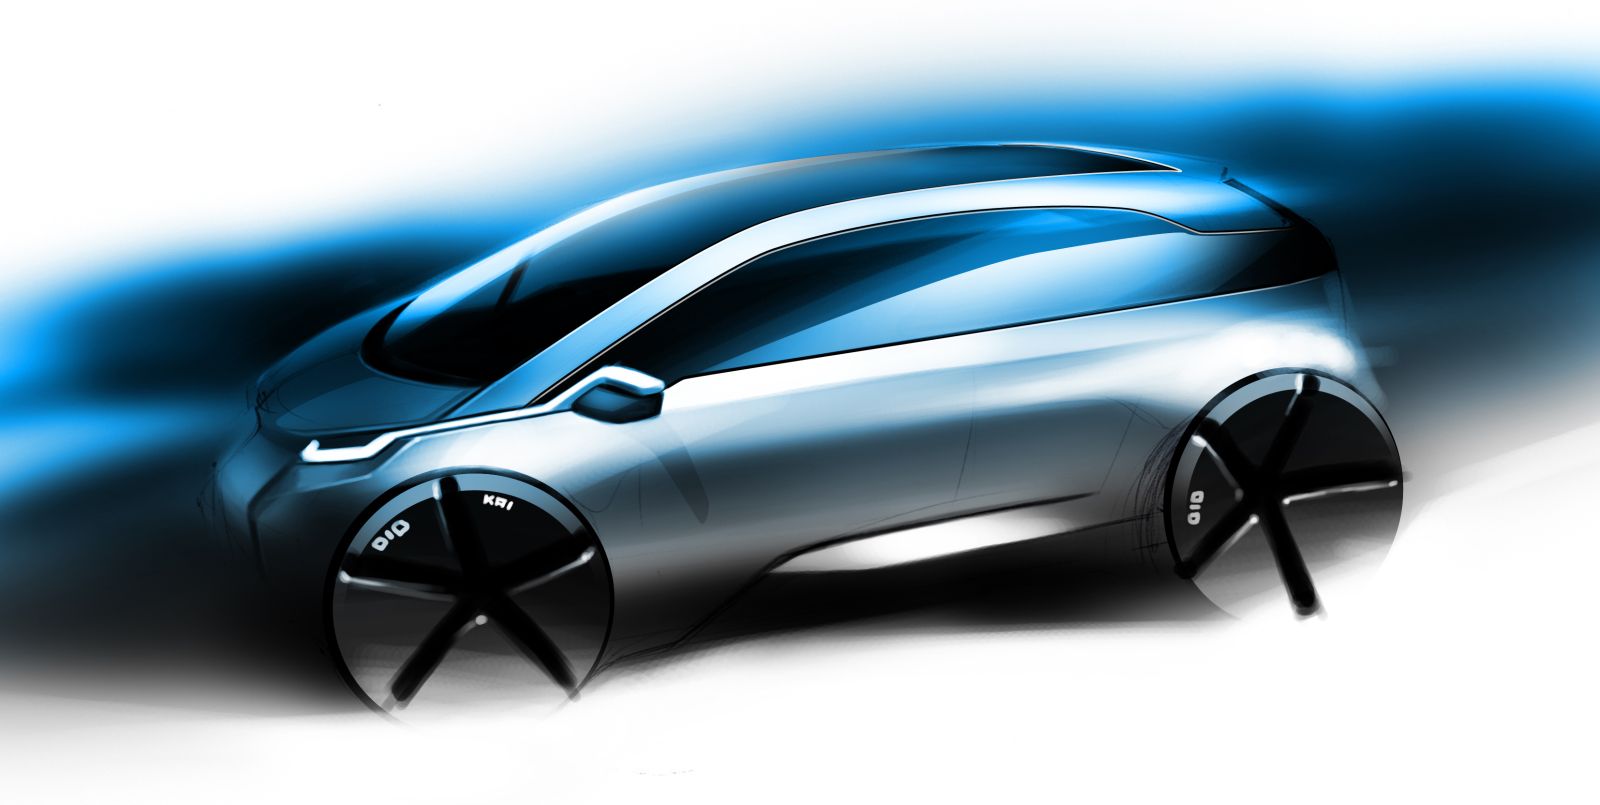 BMW Megacity sketch